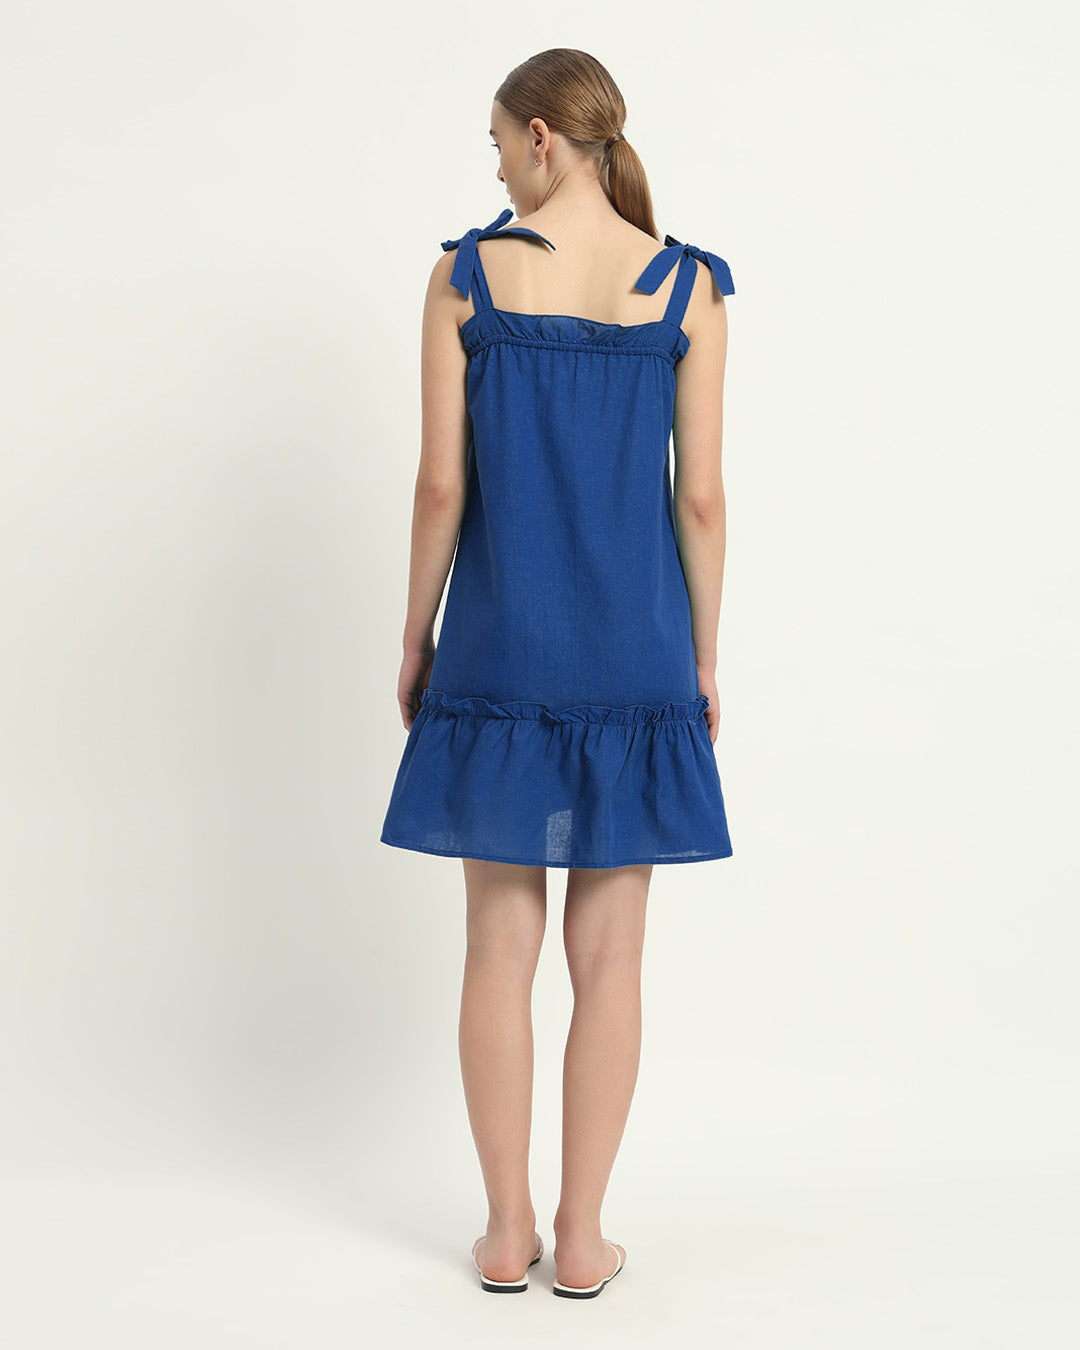 The Cobalt Amalfi Cotton Dress